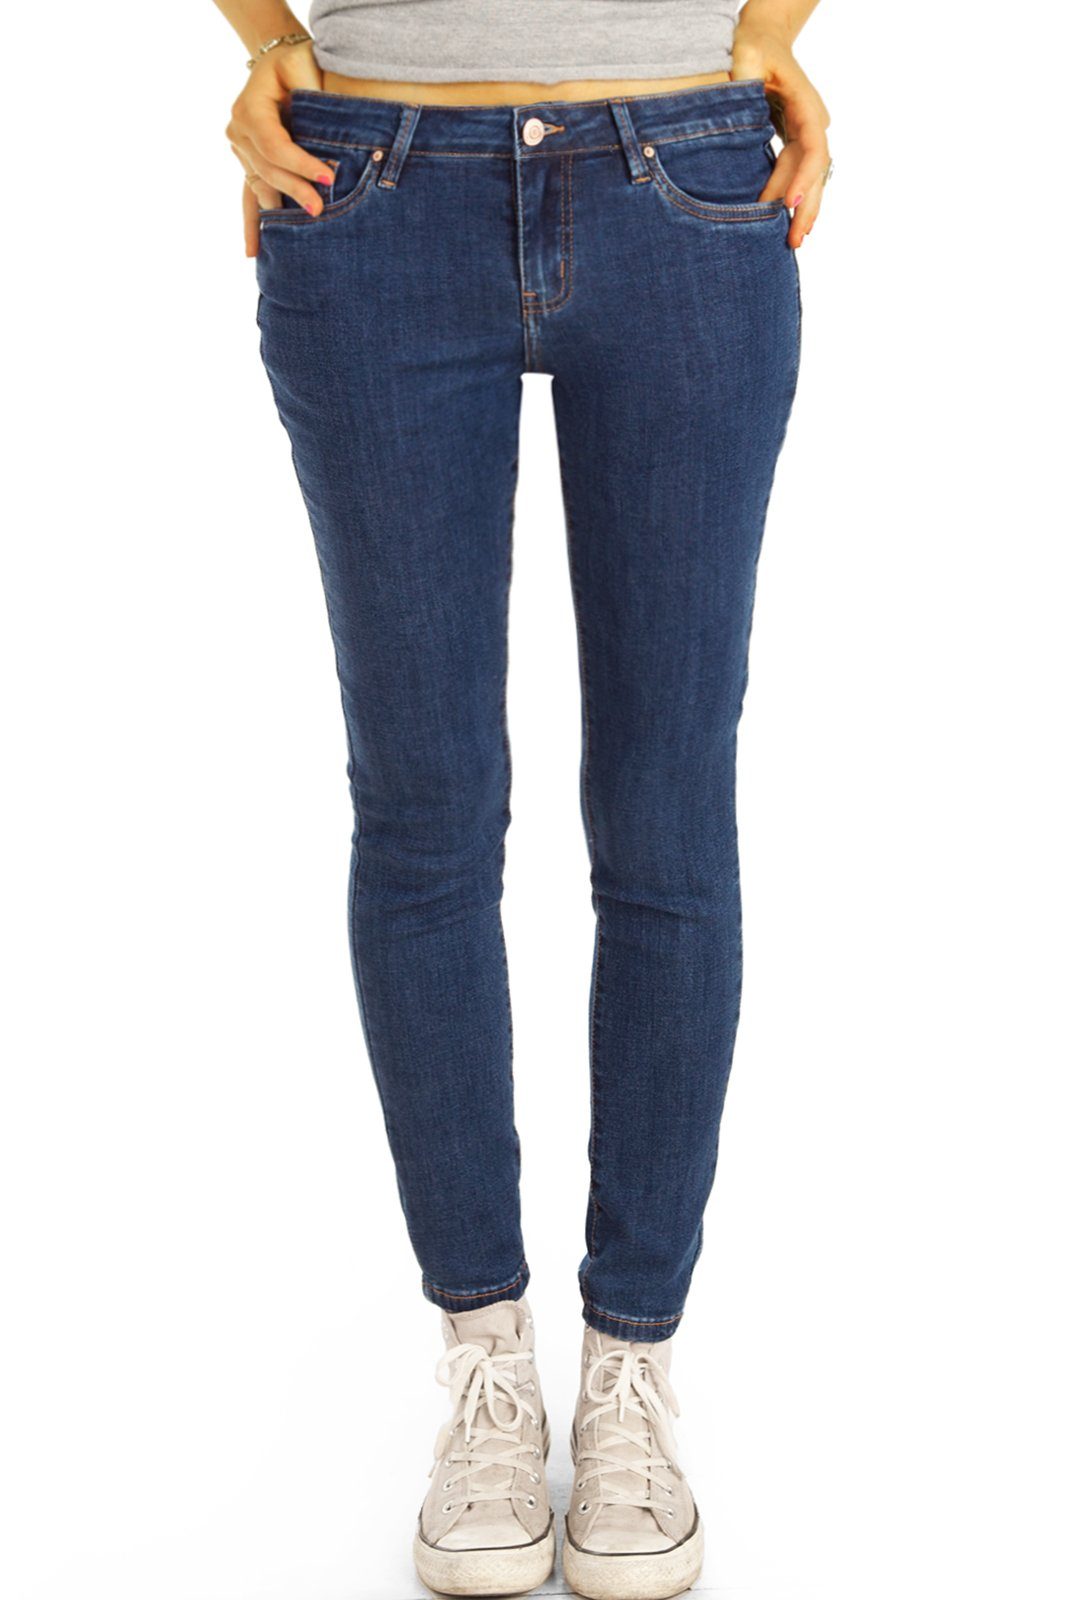 Stretch-Anteil, Skinny Low-rise-Jeans mit Hose Hüftjeans be styled Röhrenjeans - dunkelblau Damen- j27p-1 slim 5-Pocket-Style Stretch -